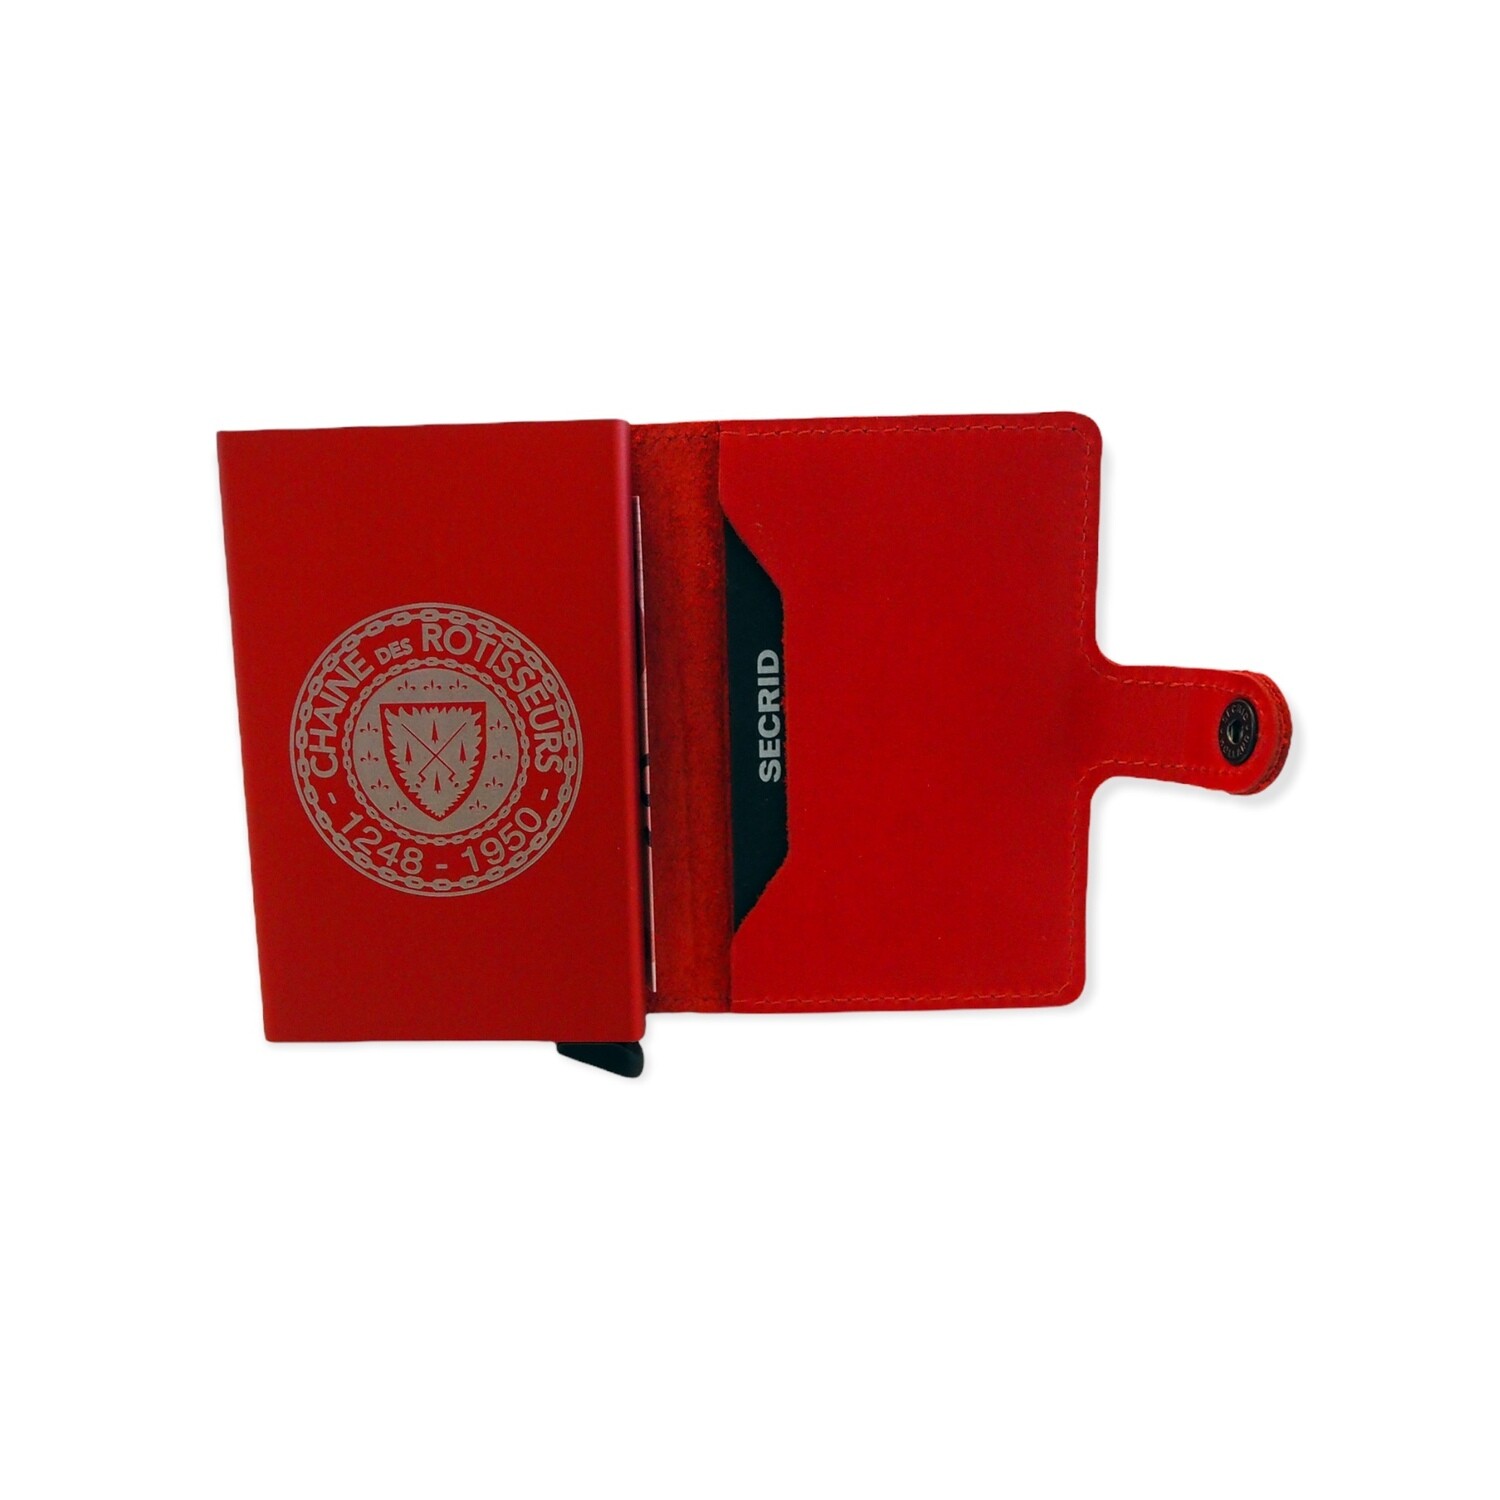 Secrid-lompakko, punainen, Rôtisseurs-logolla